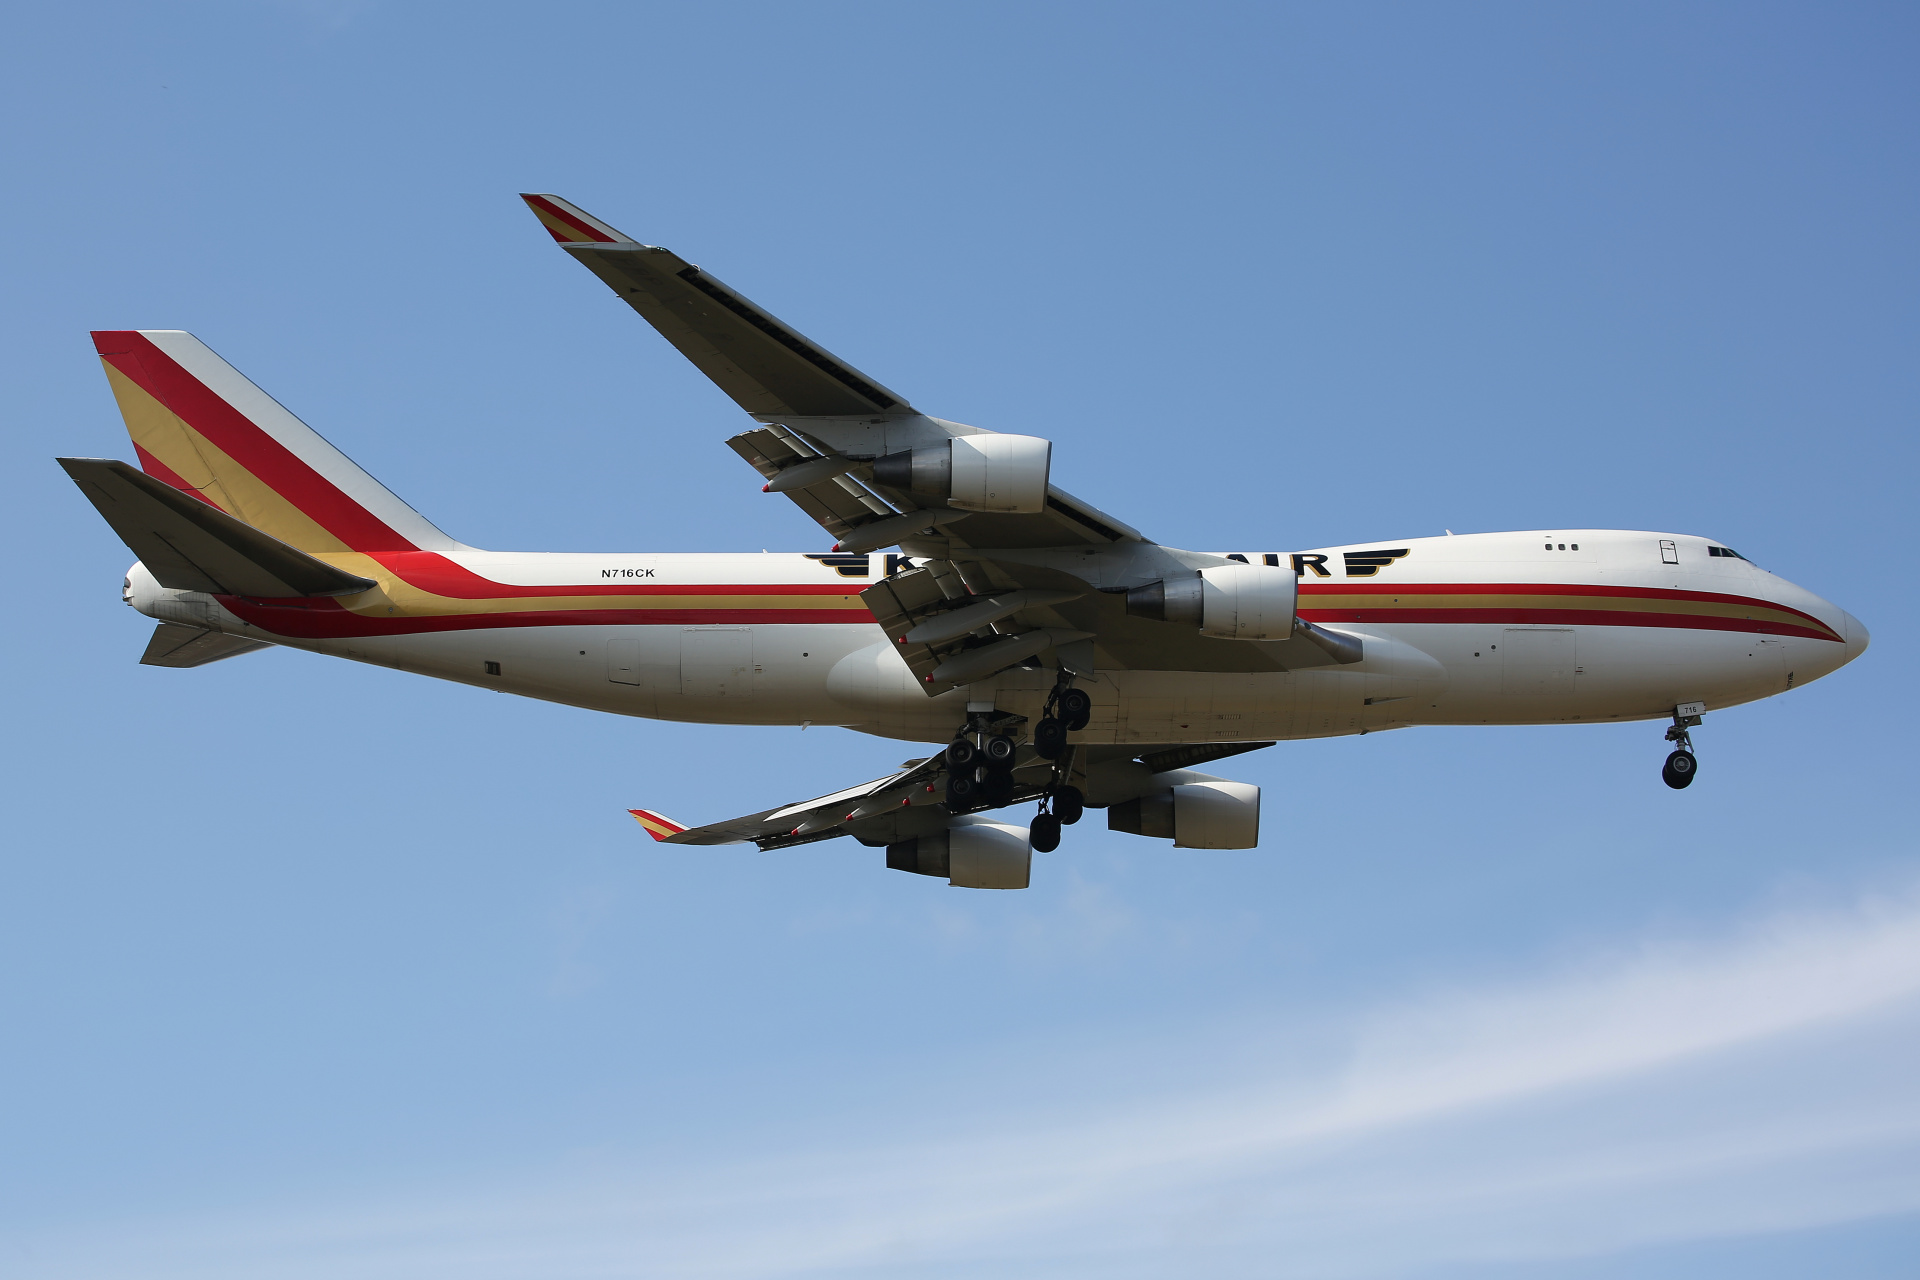 N716CK (Aircraft » EPWA Spotting » Boeing 747-400F » Kalitta Air)